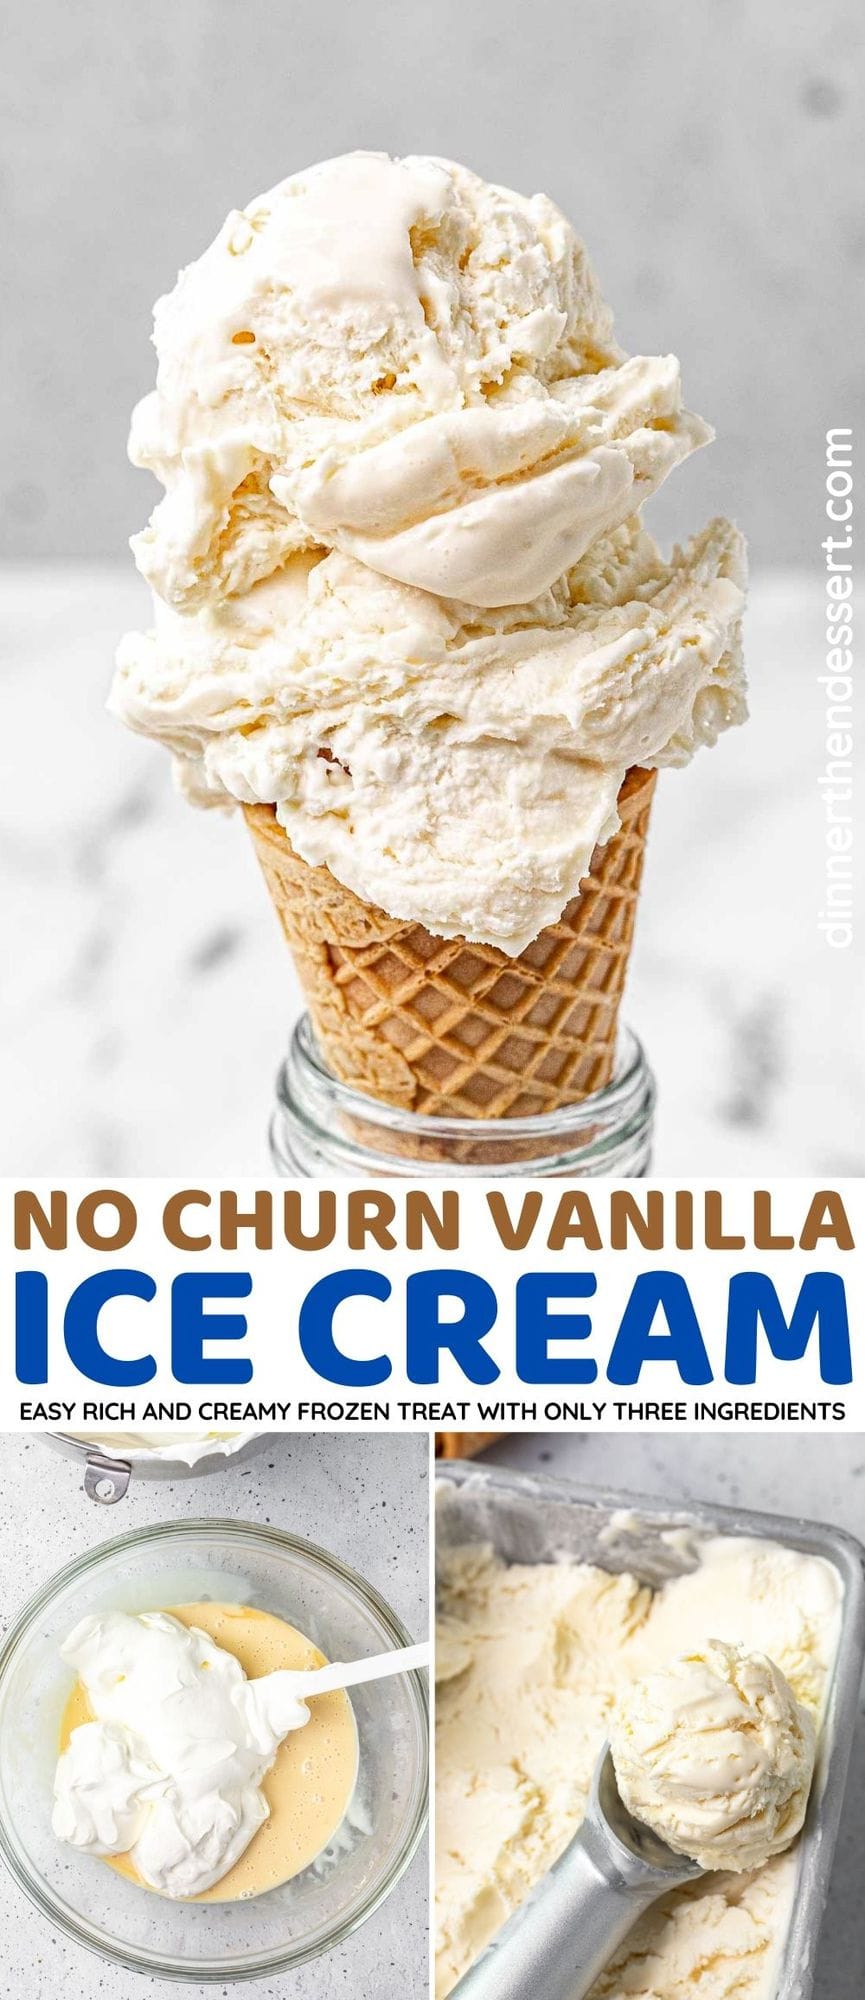 No Churn Vanilla Ice Cream collage